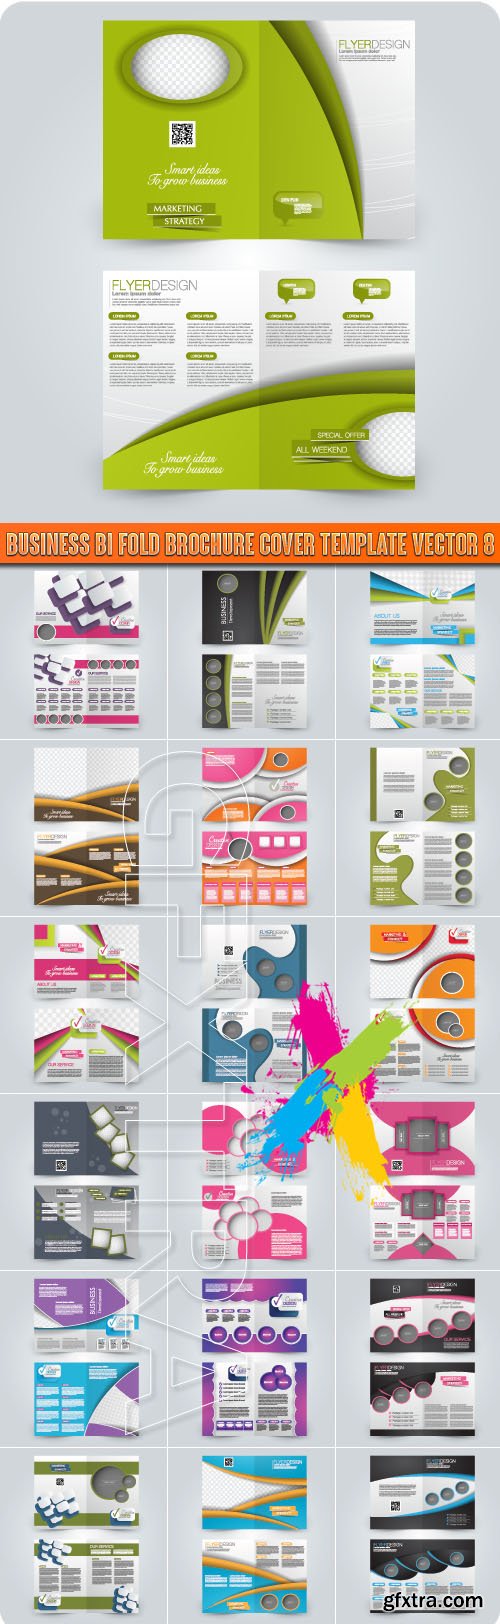 Business bi fold brochure cover template vector 8